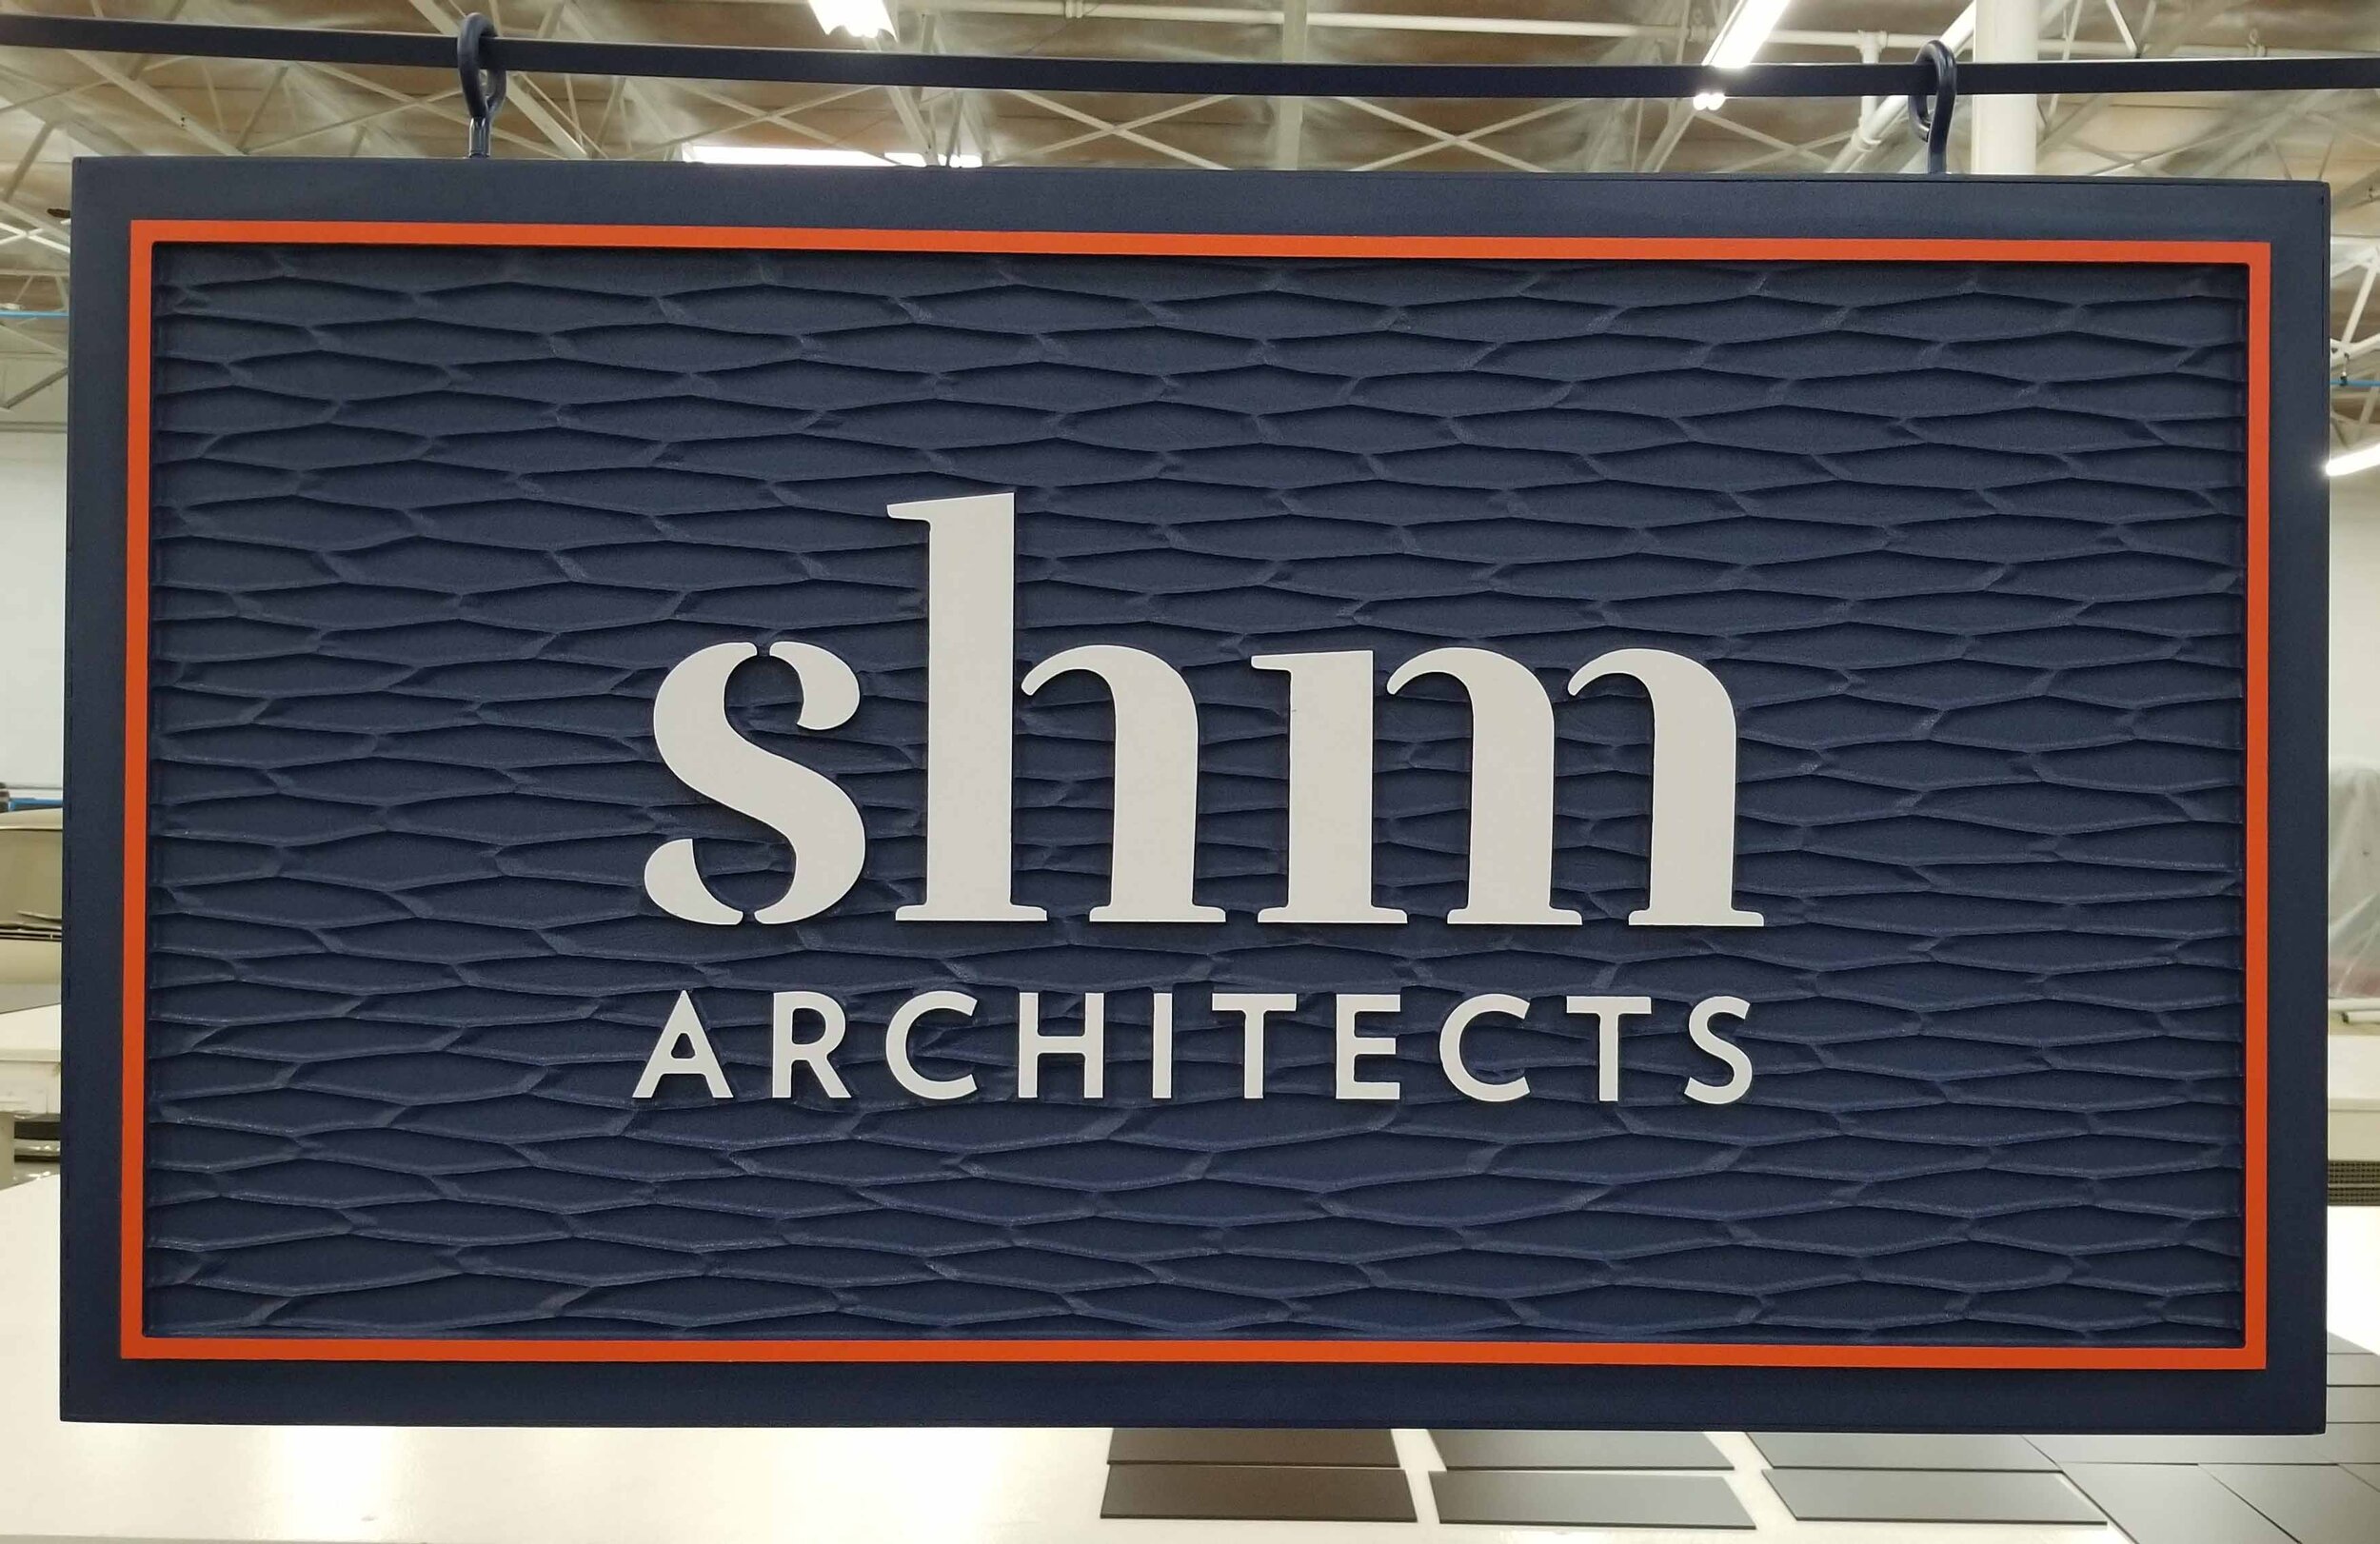 shm architects sign pic 1.jpg